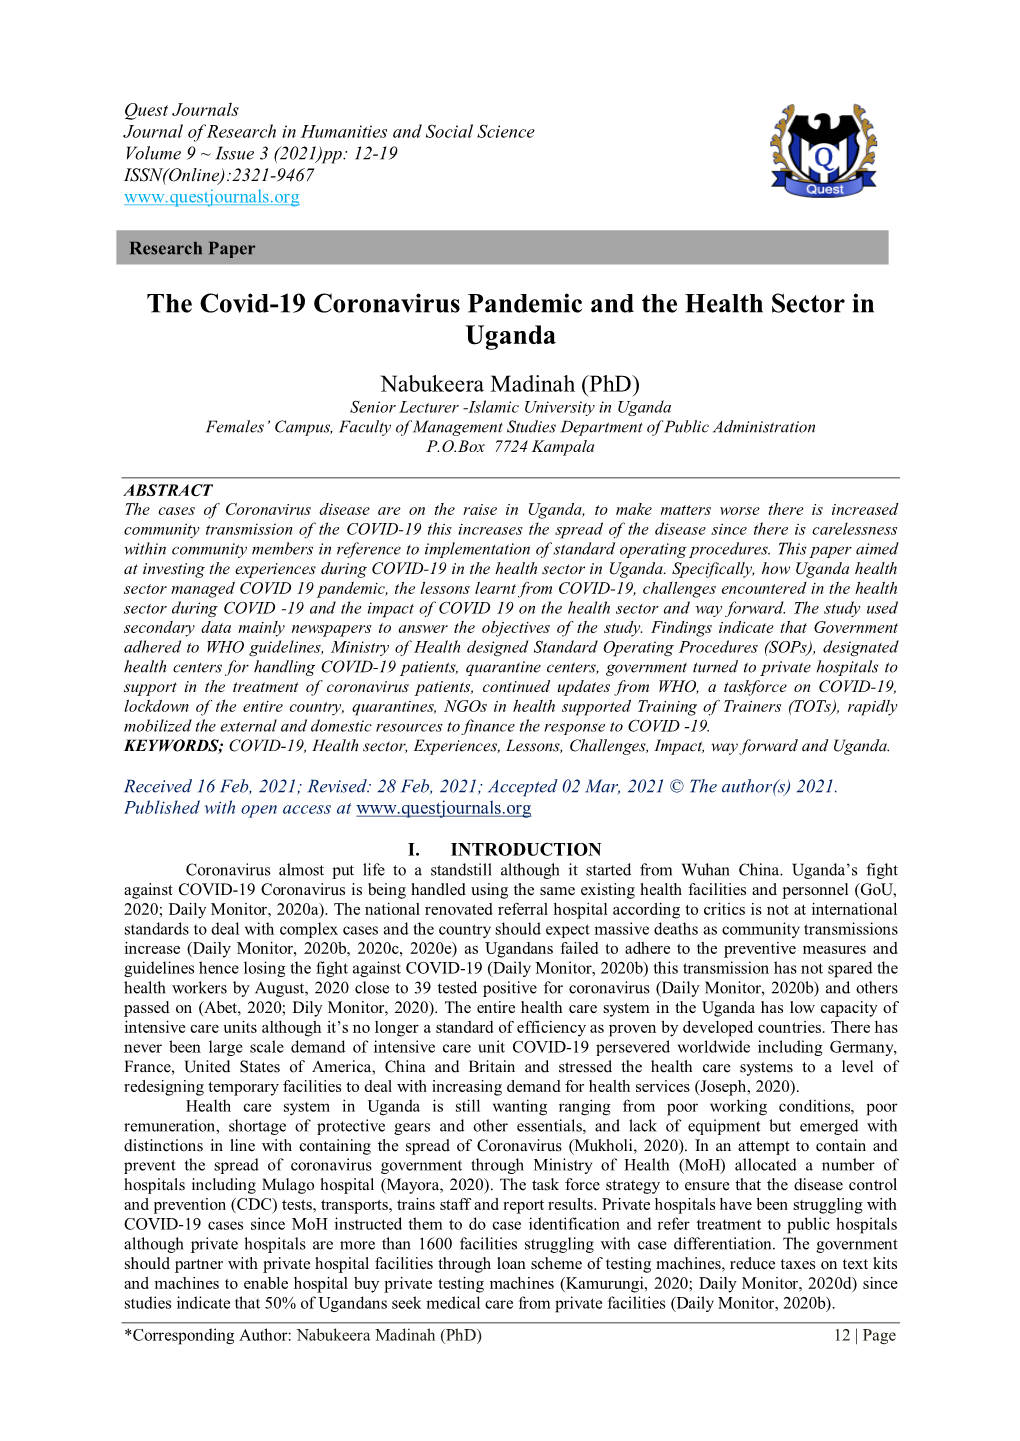 The Covid-19 Coronavirus Pandemic and the Health Sector in Uganda